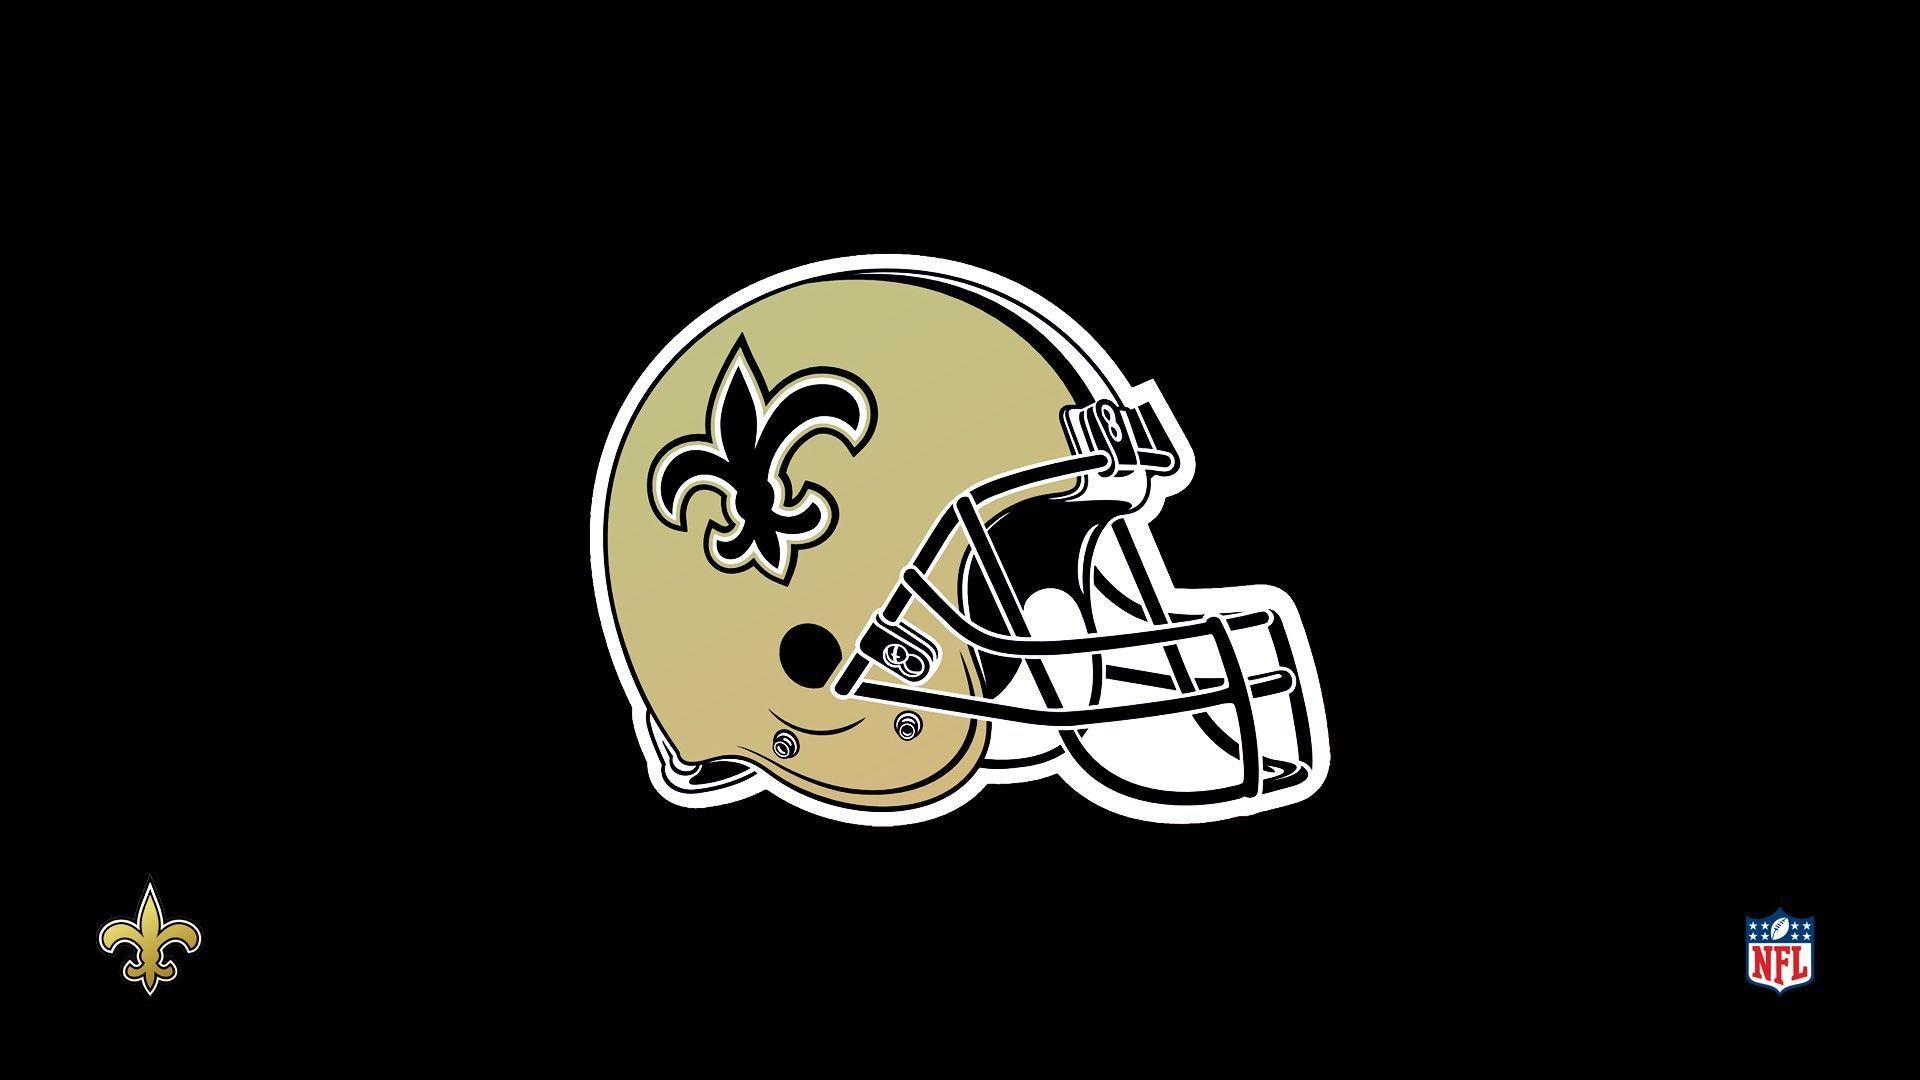 NFL New Orleans Saints Logo Helmet wallpaper HD 2016 in Football